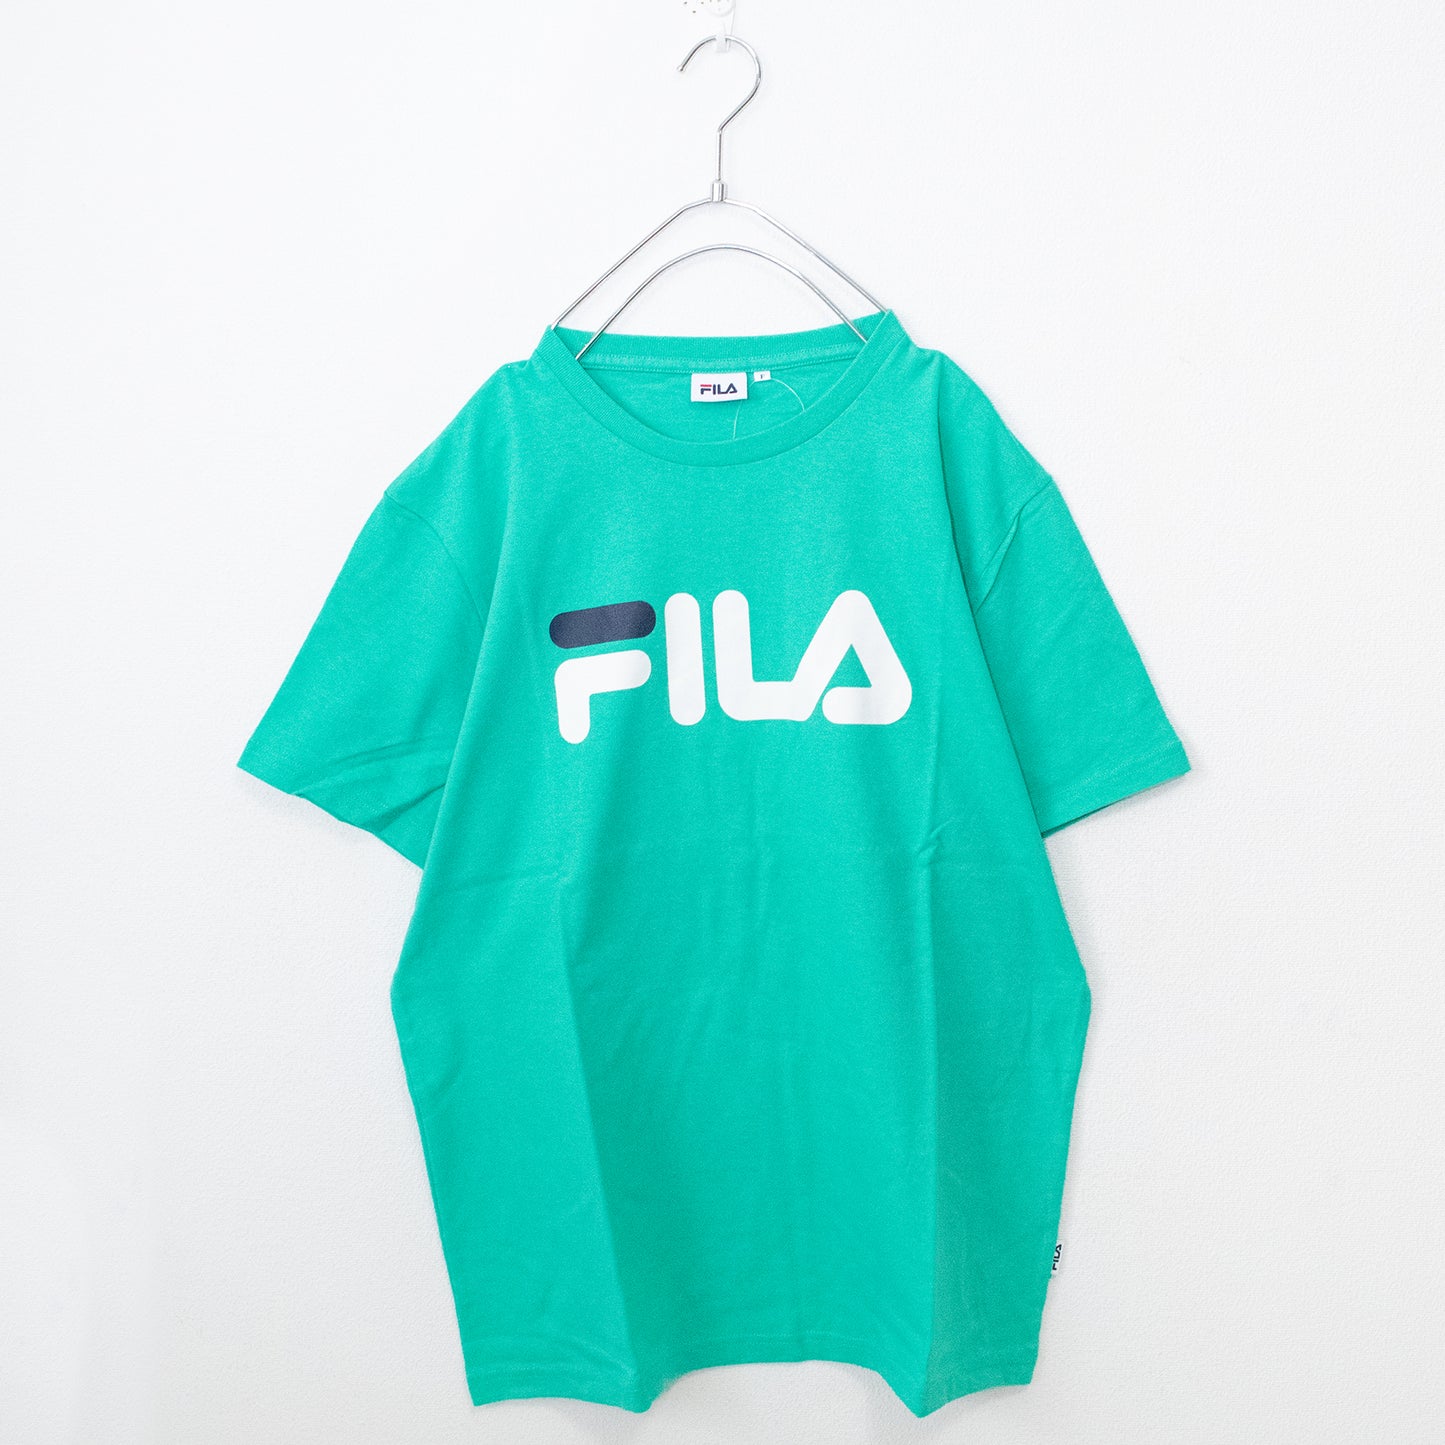 FILA BTS Model T-shirt Turquoise Blue